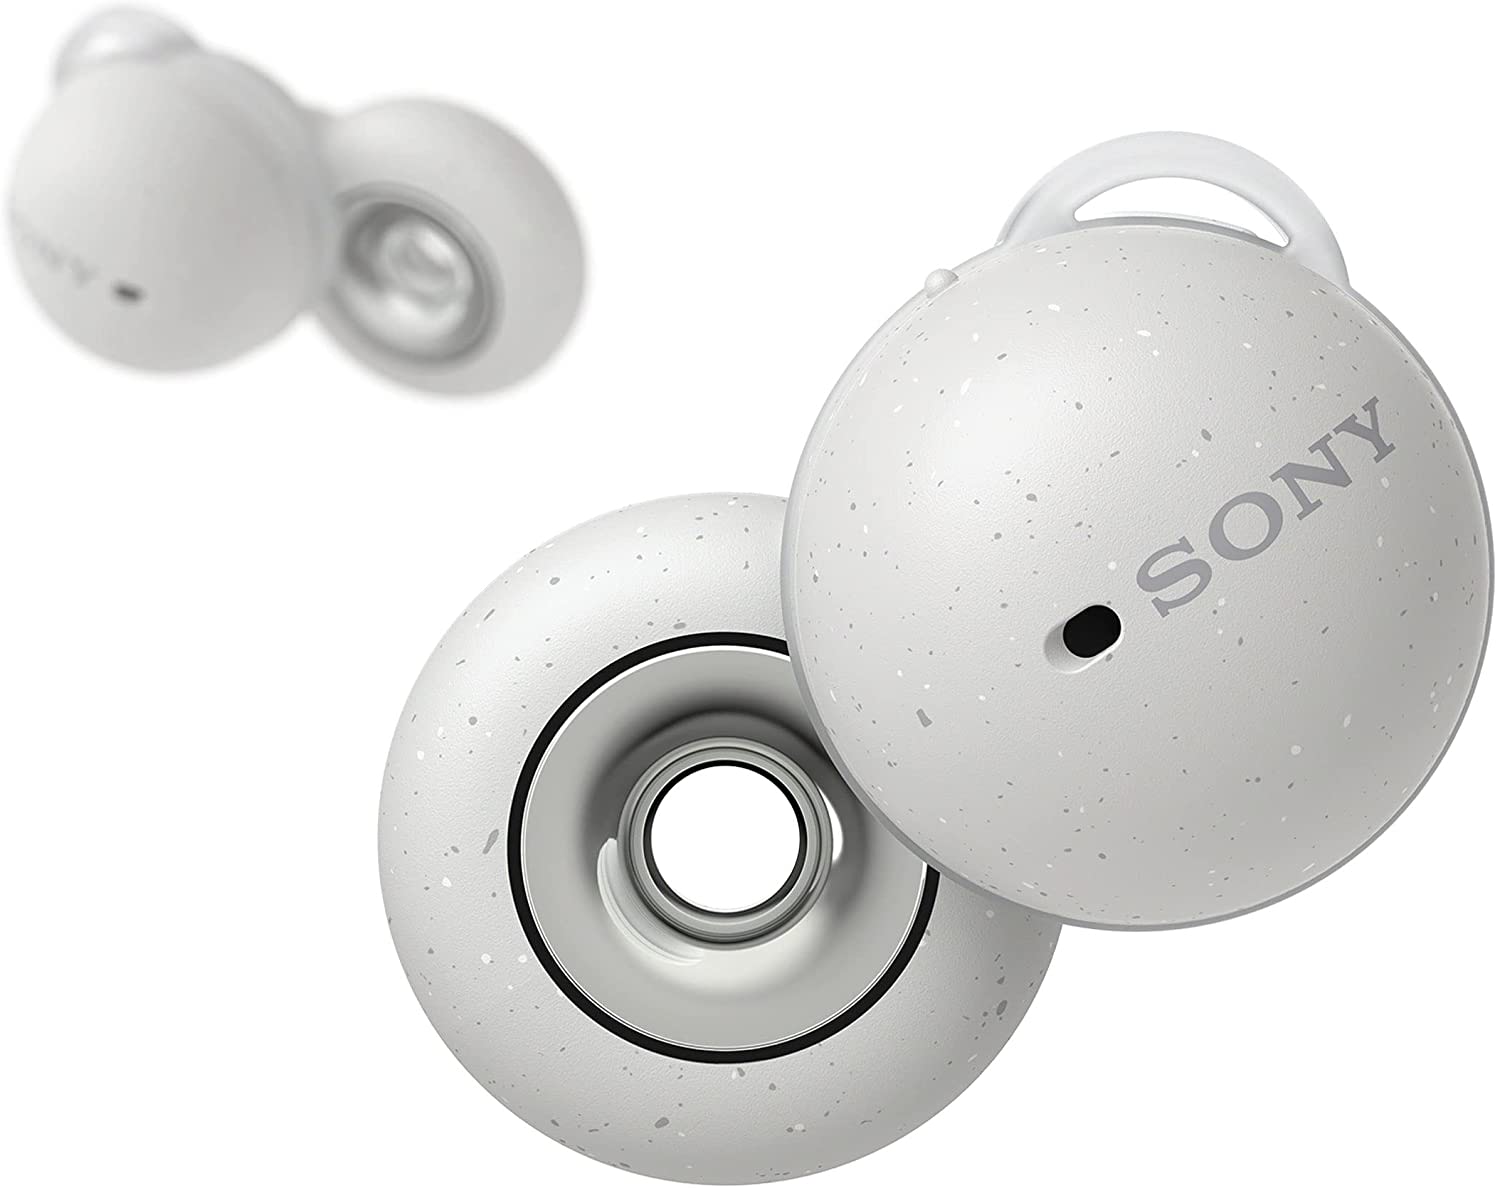 Sony LinkBuds S Review - Versatile Wireless Earphones for every usage  scenario - The Tech Revolutionist